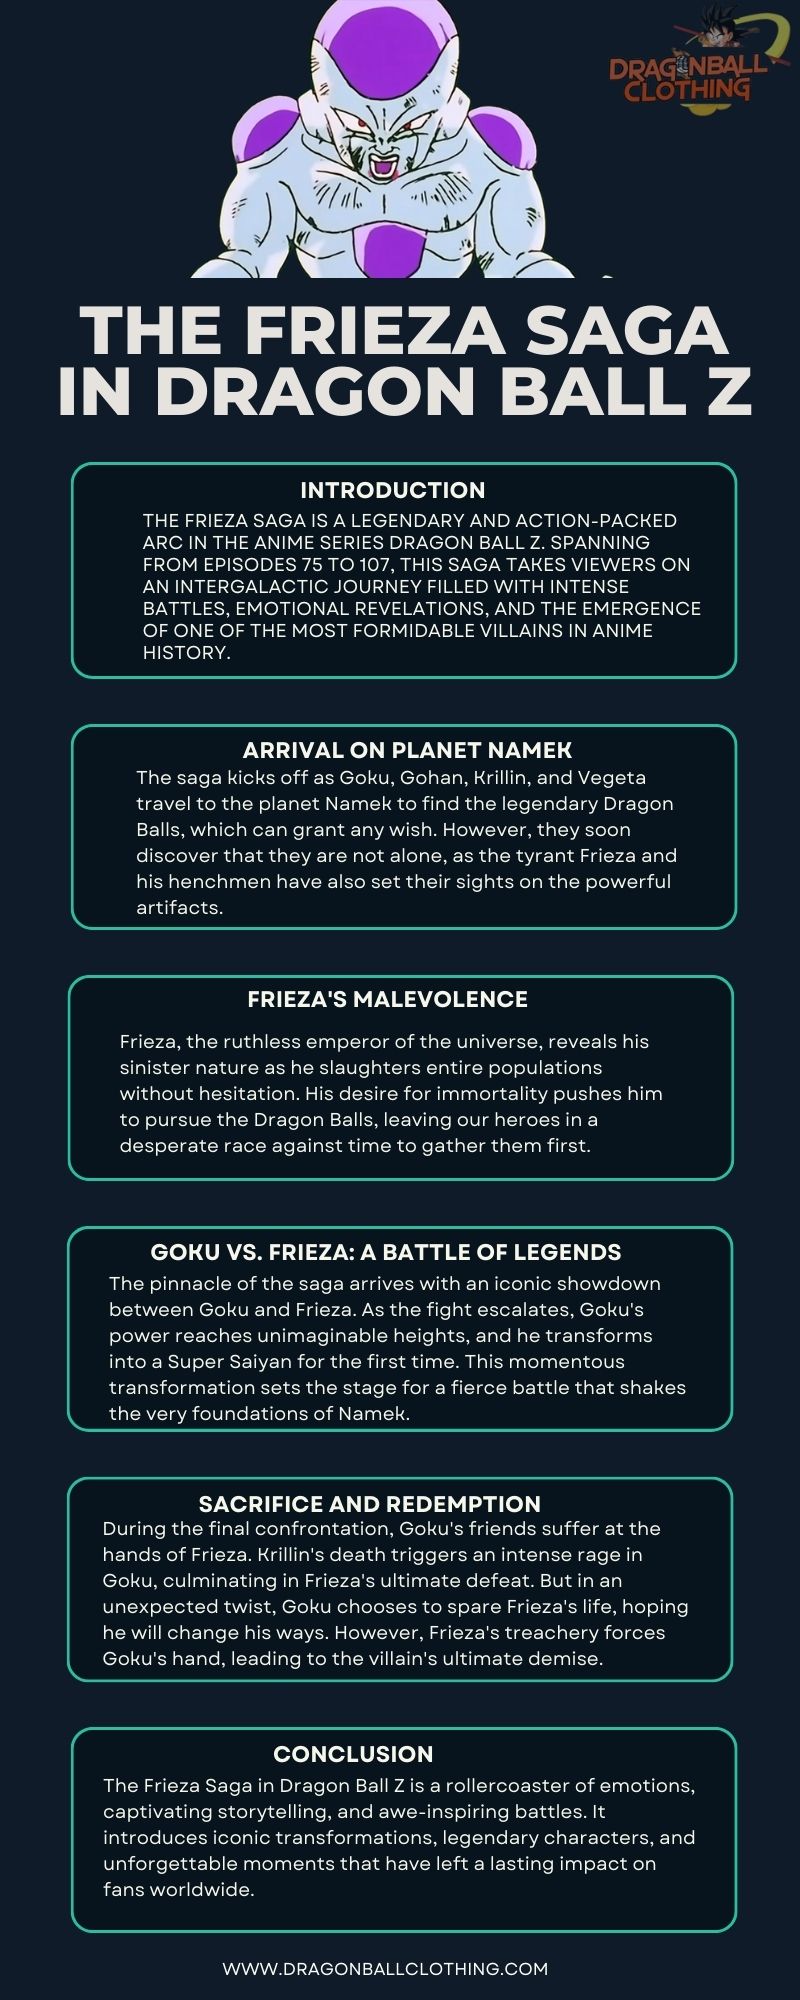 The Frieza saga in Dragon Ball Z infographic